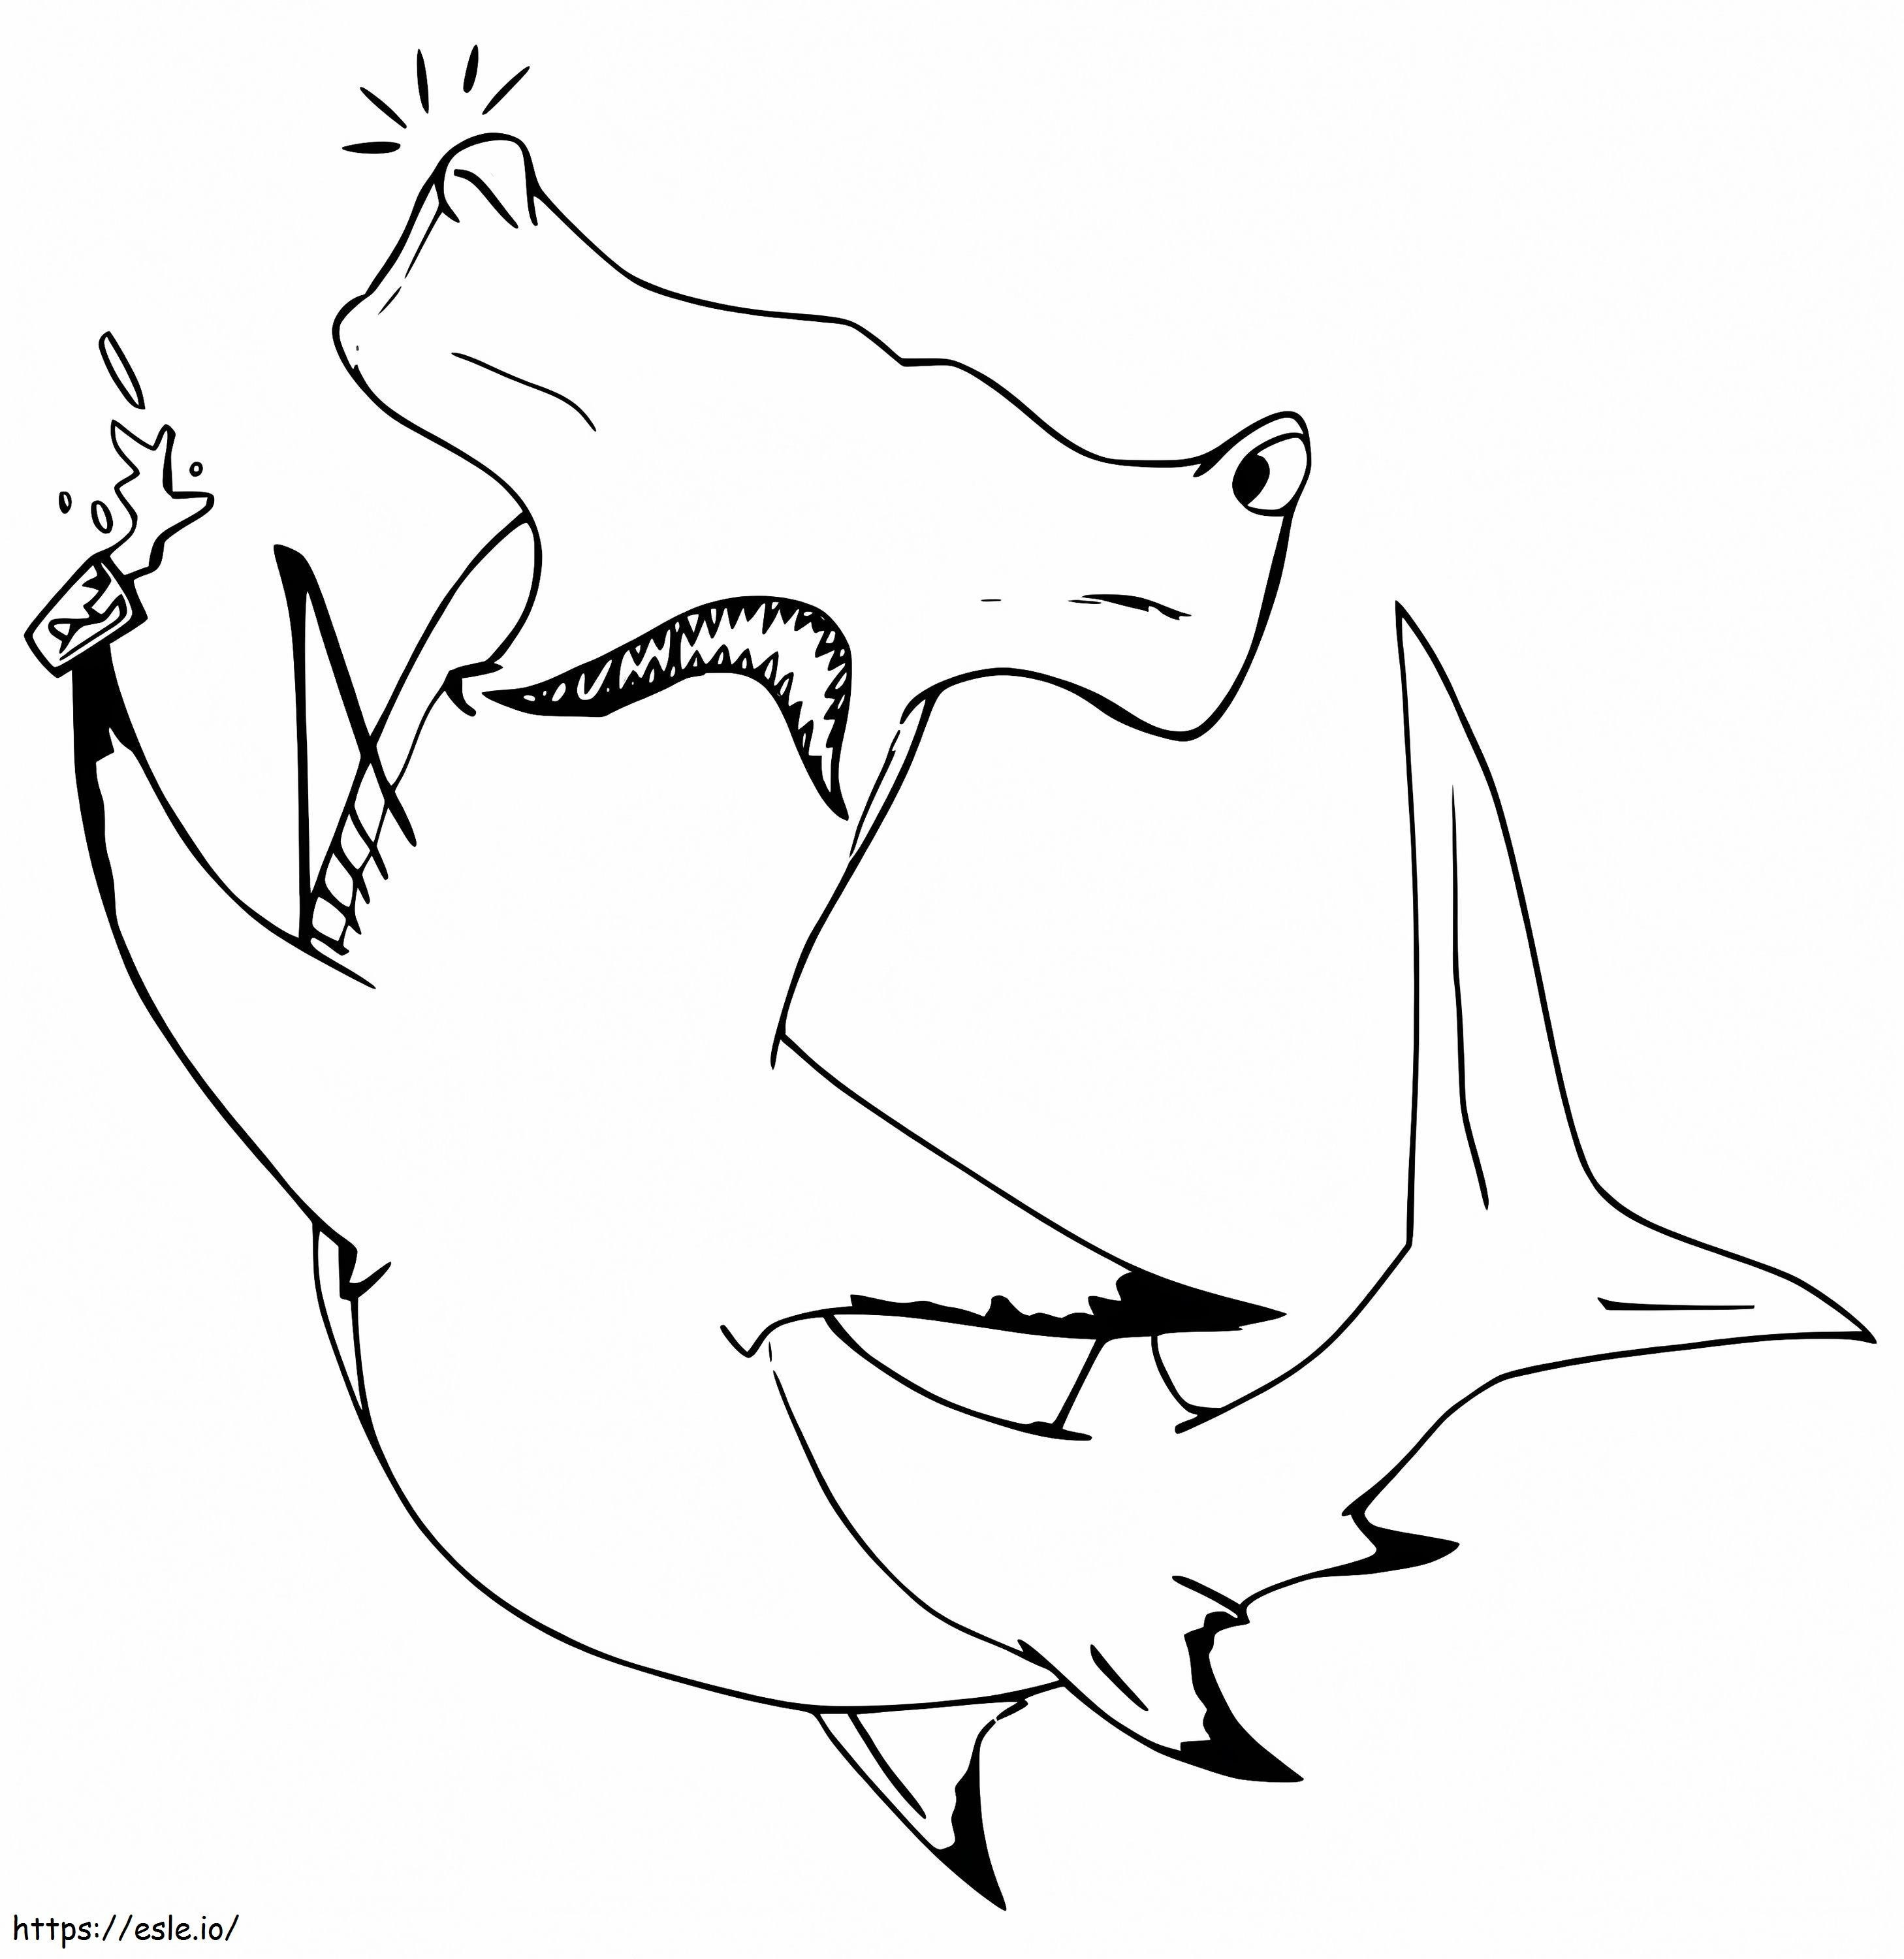 Cartoon Hammerhead Shark coloring page